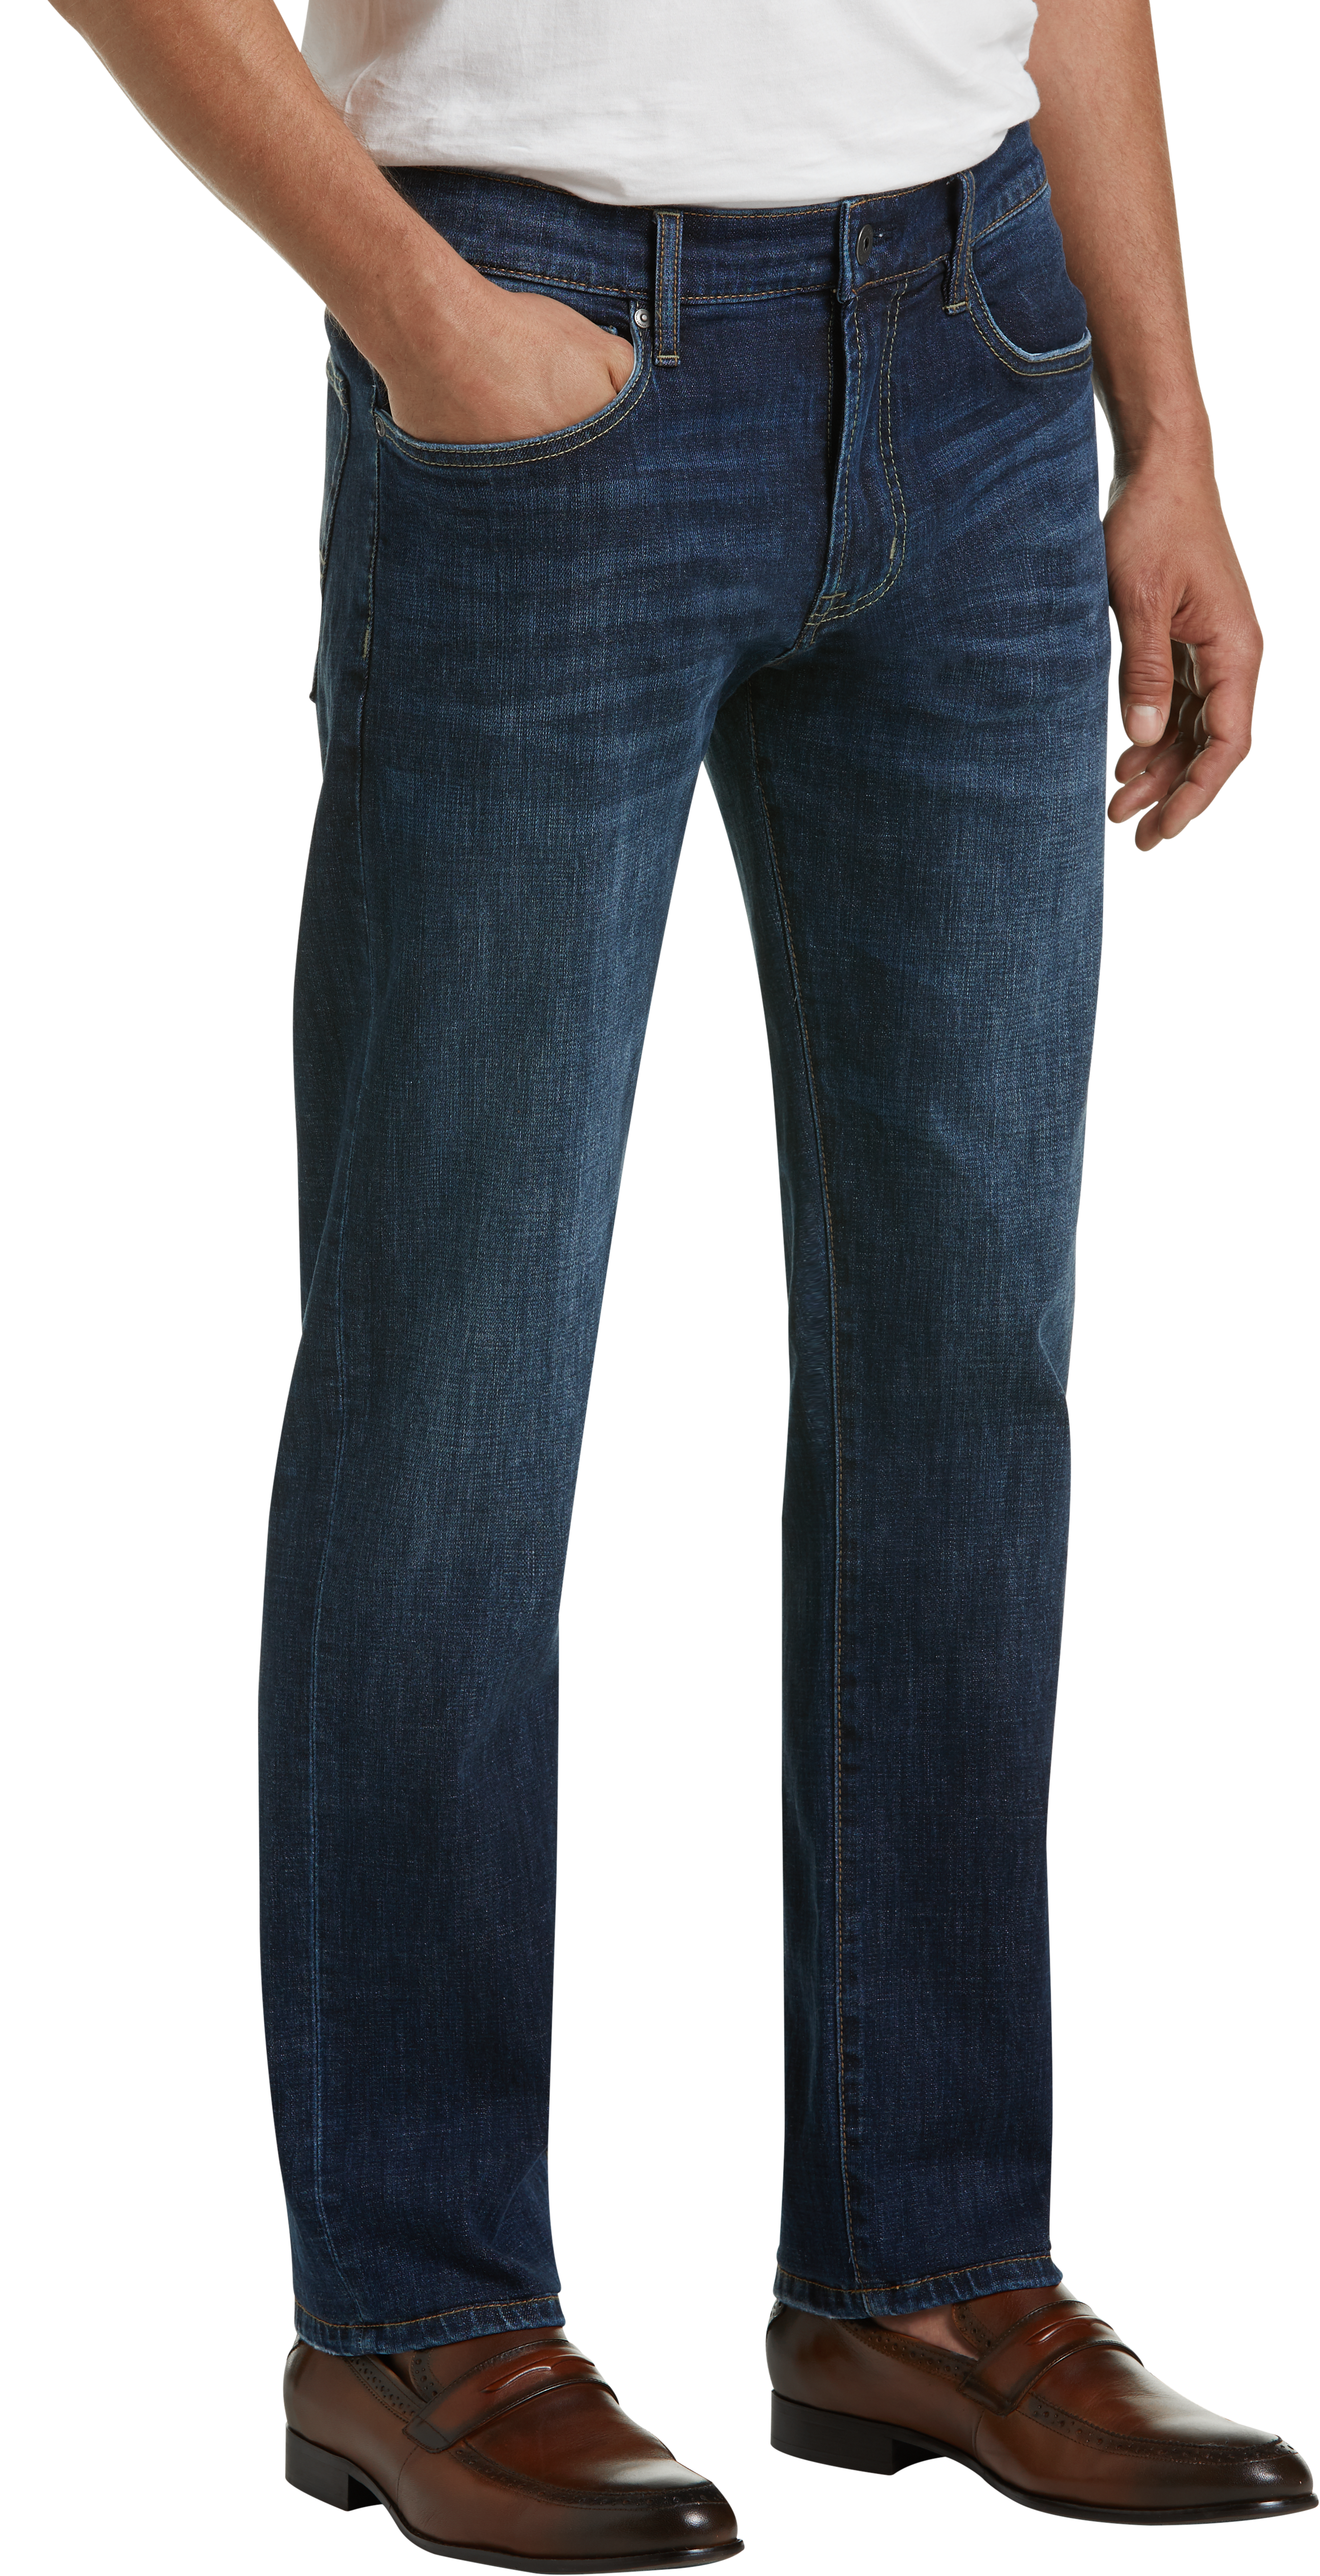 Joseph Abboud Gulfstream Fairview Dark Wash Athletic Fit Jeans - Men's ...